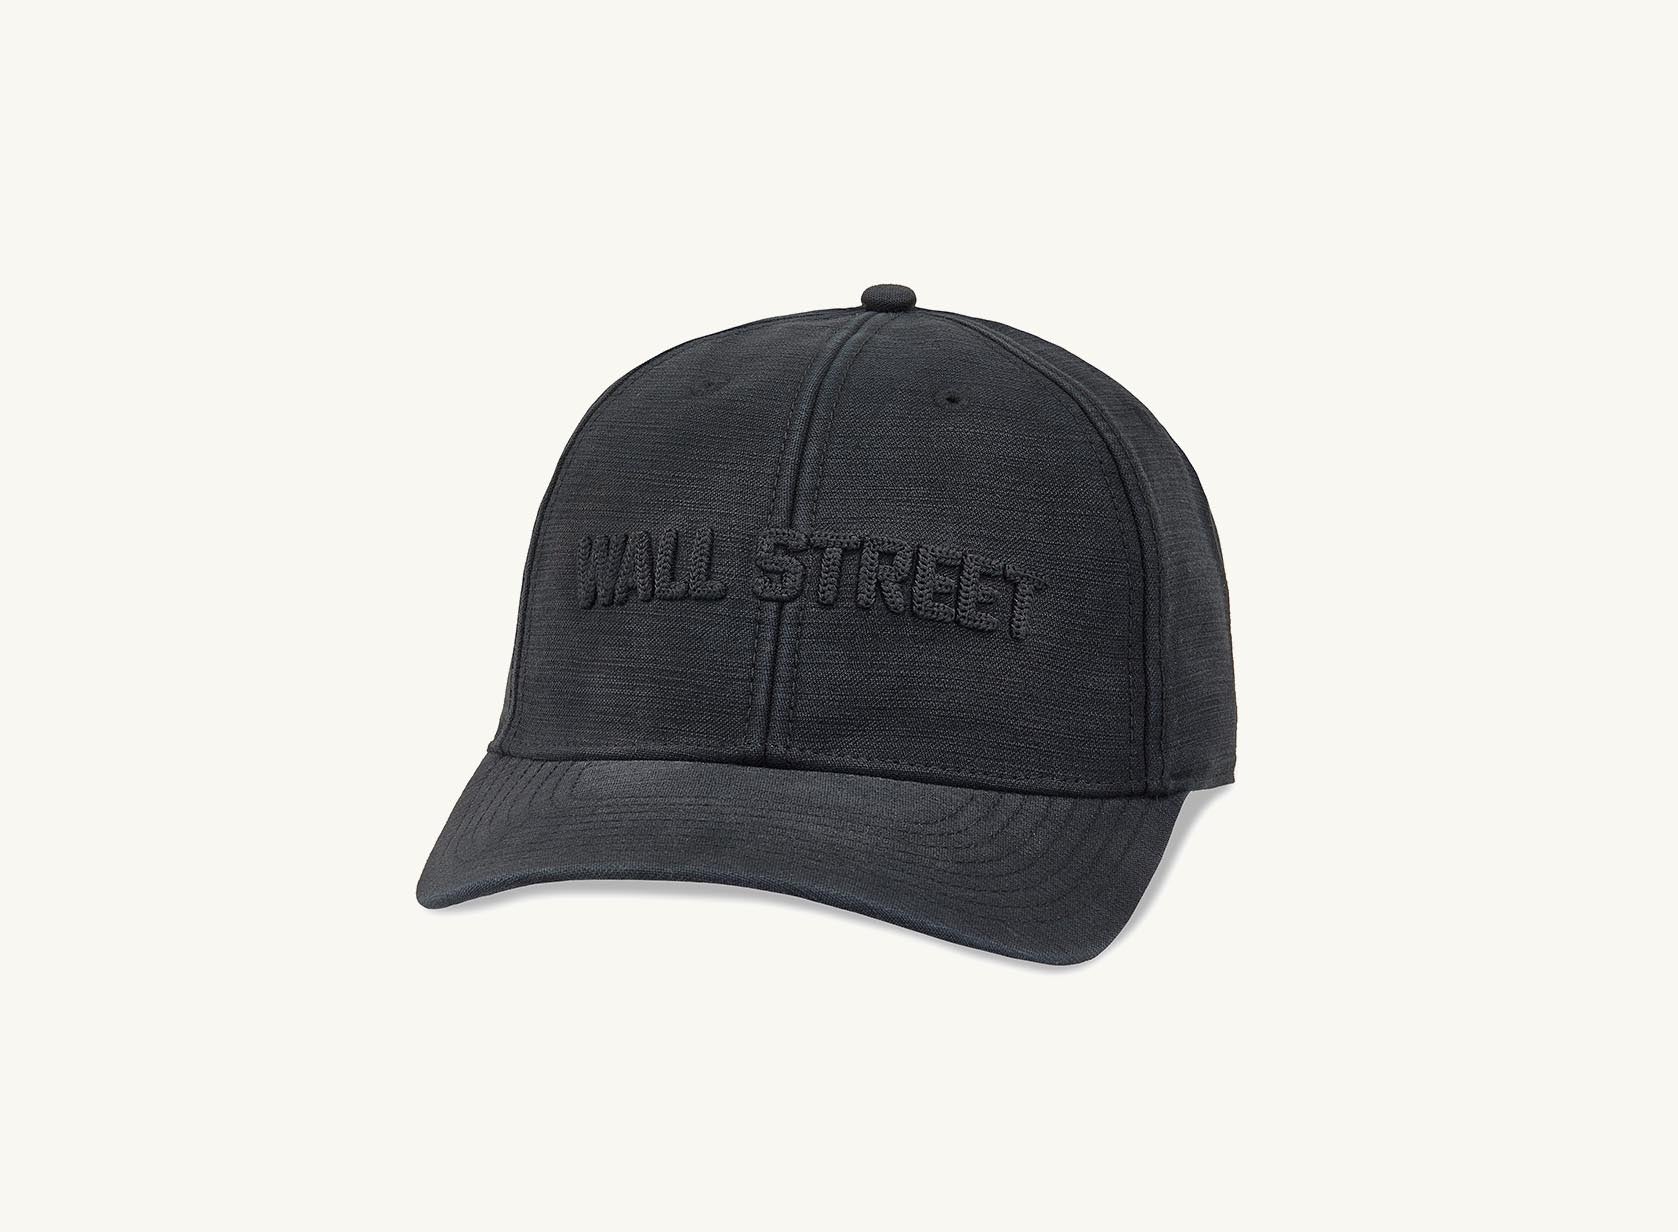 black wallstreet hat